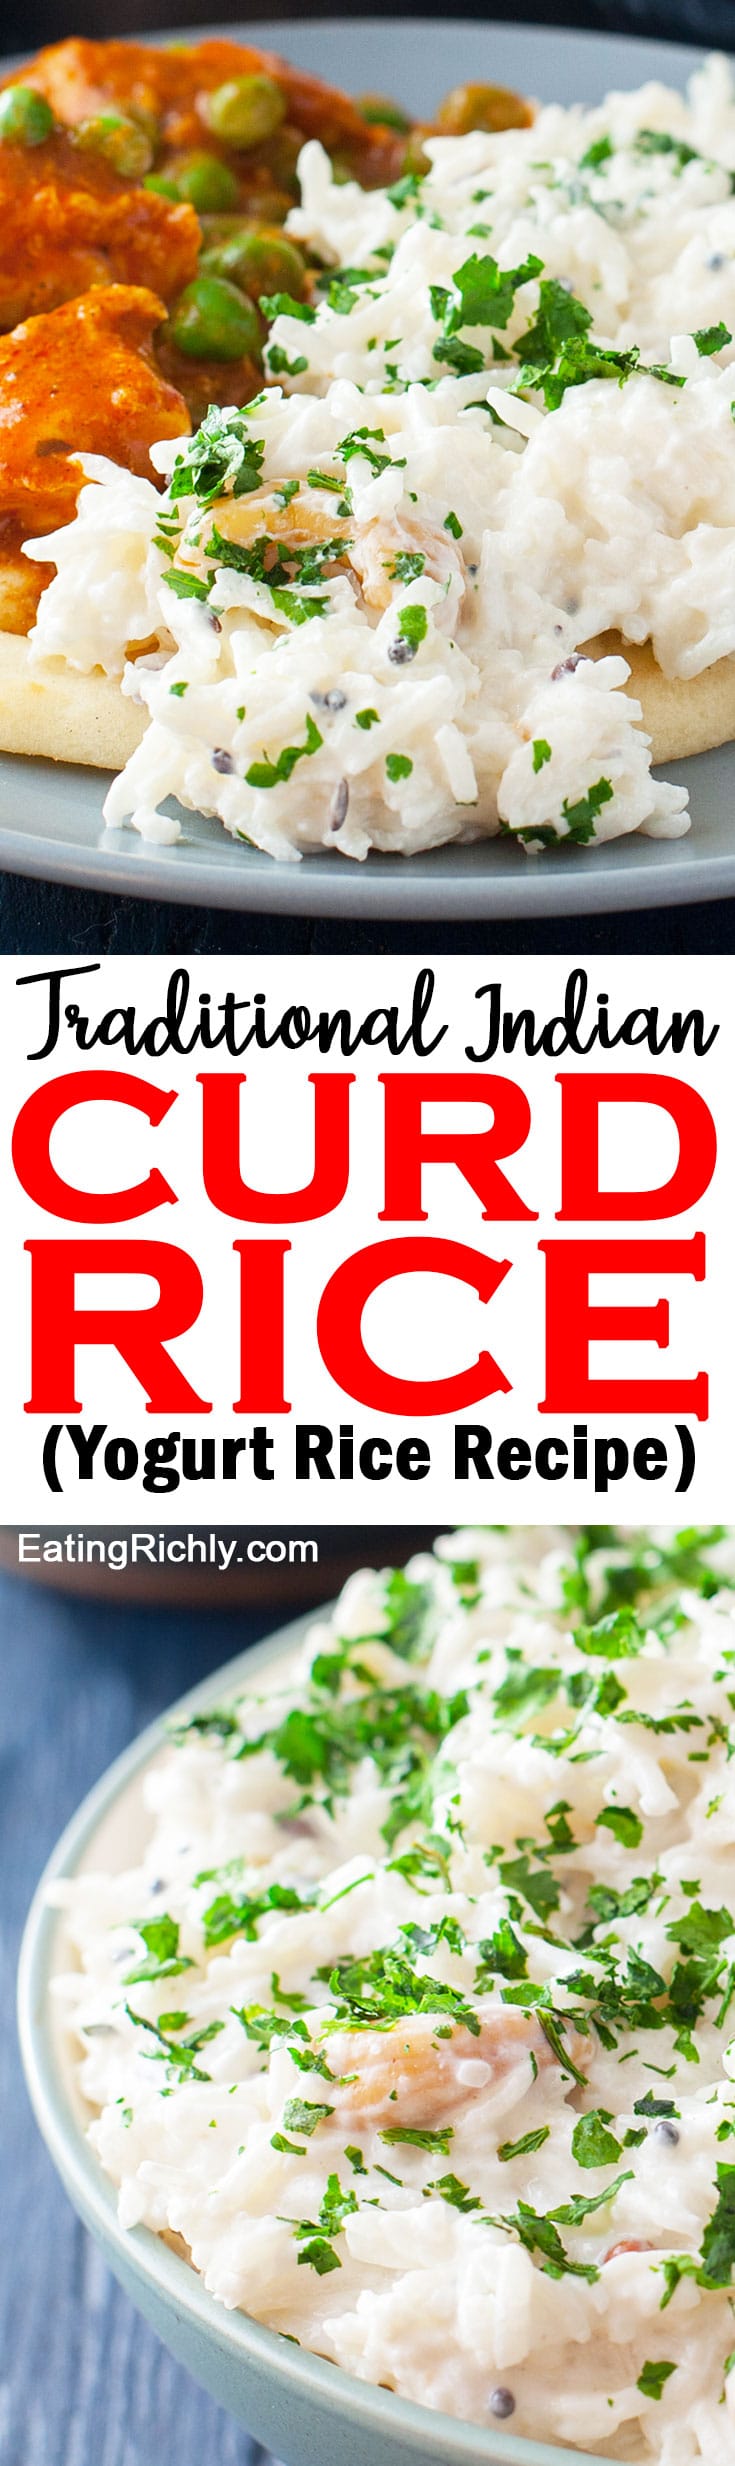 Indian Curd Rice Recipe